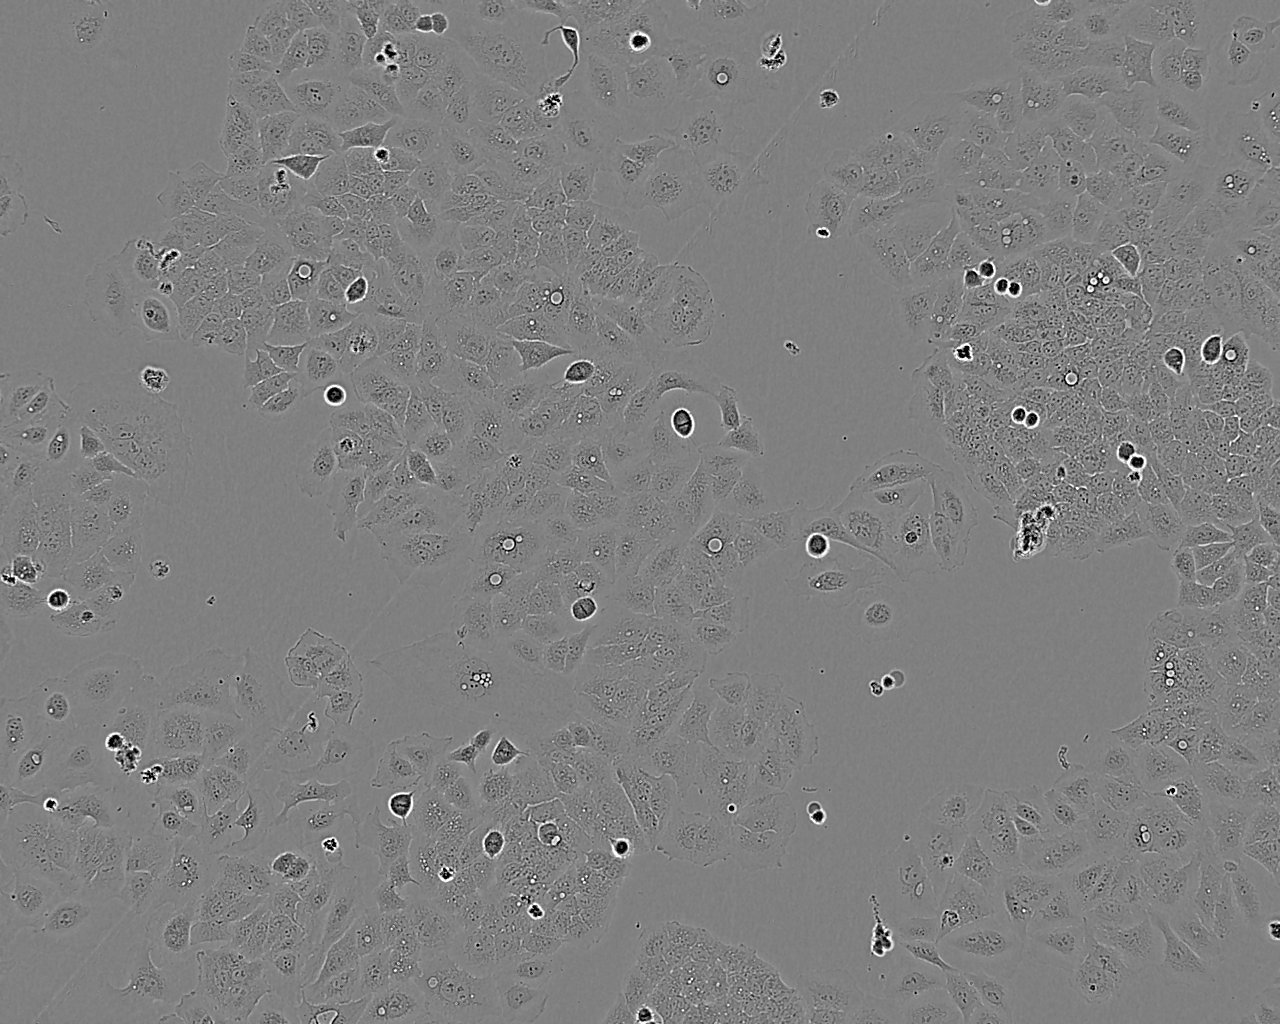 SK-MEL-28 epithelioid cells人恶性黑色素瘤细胞系